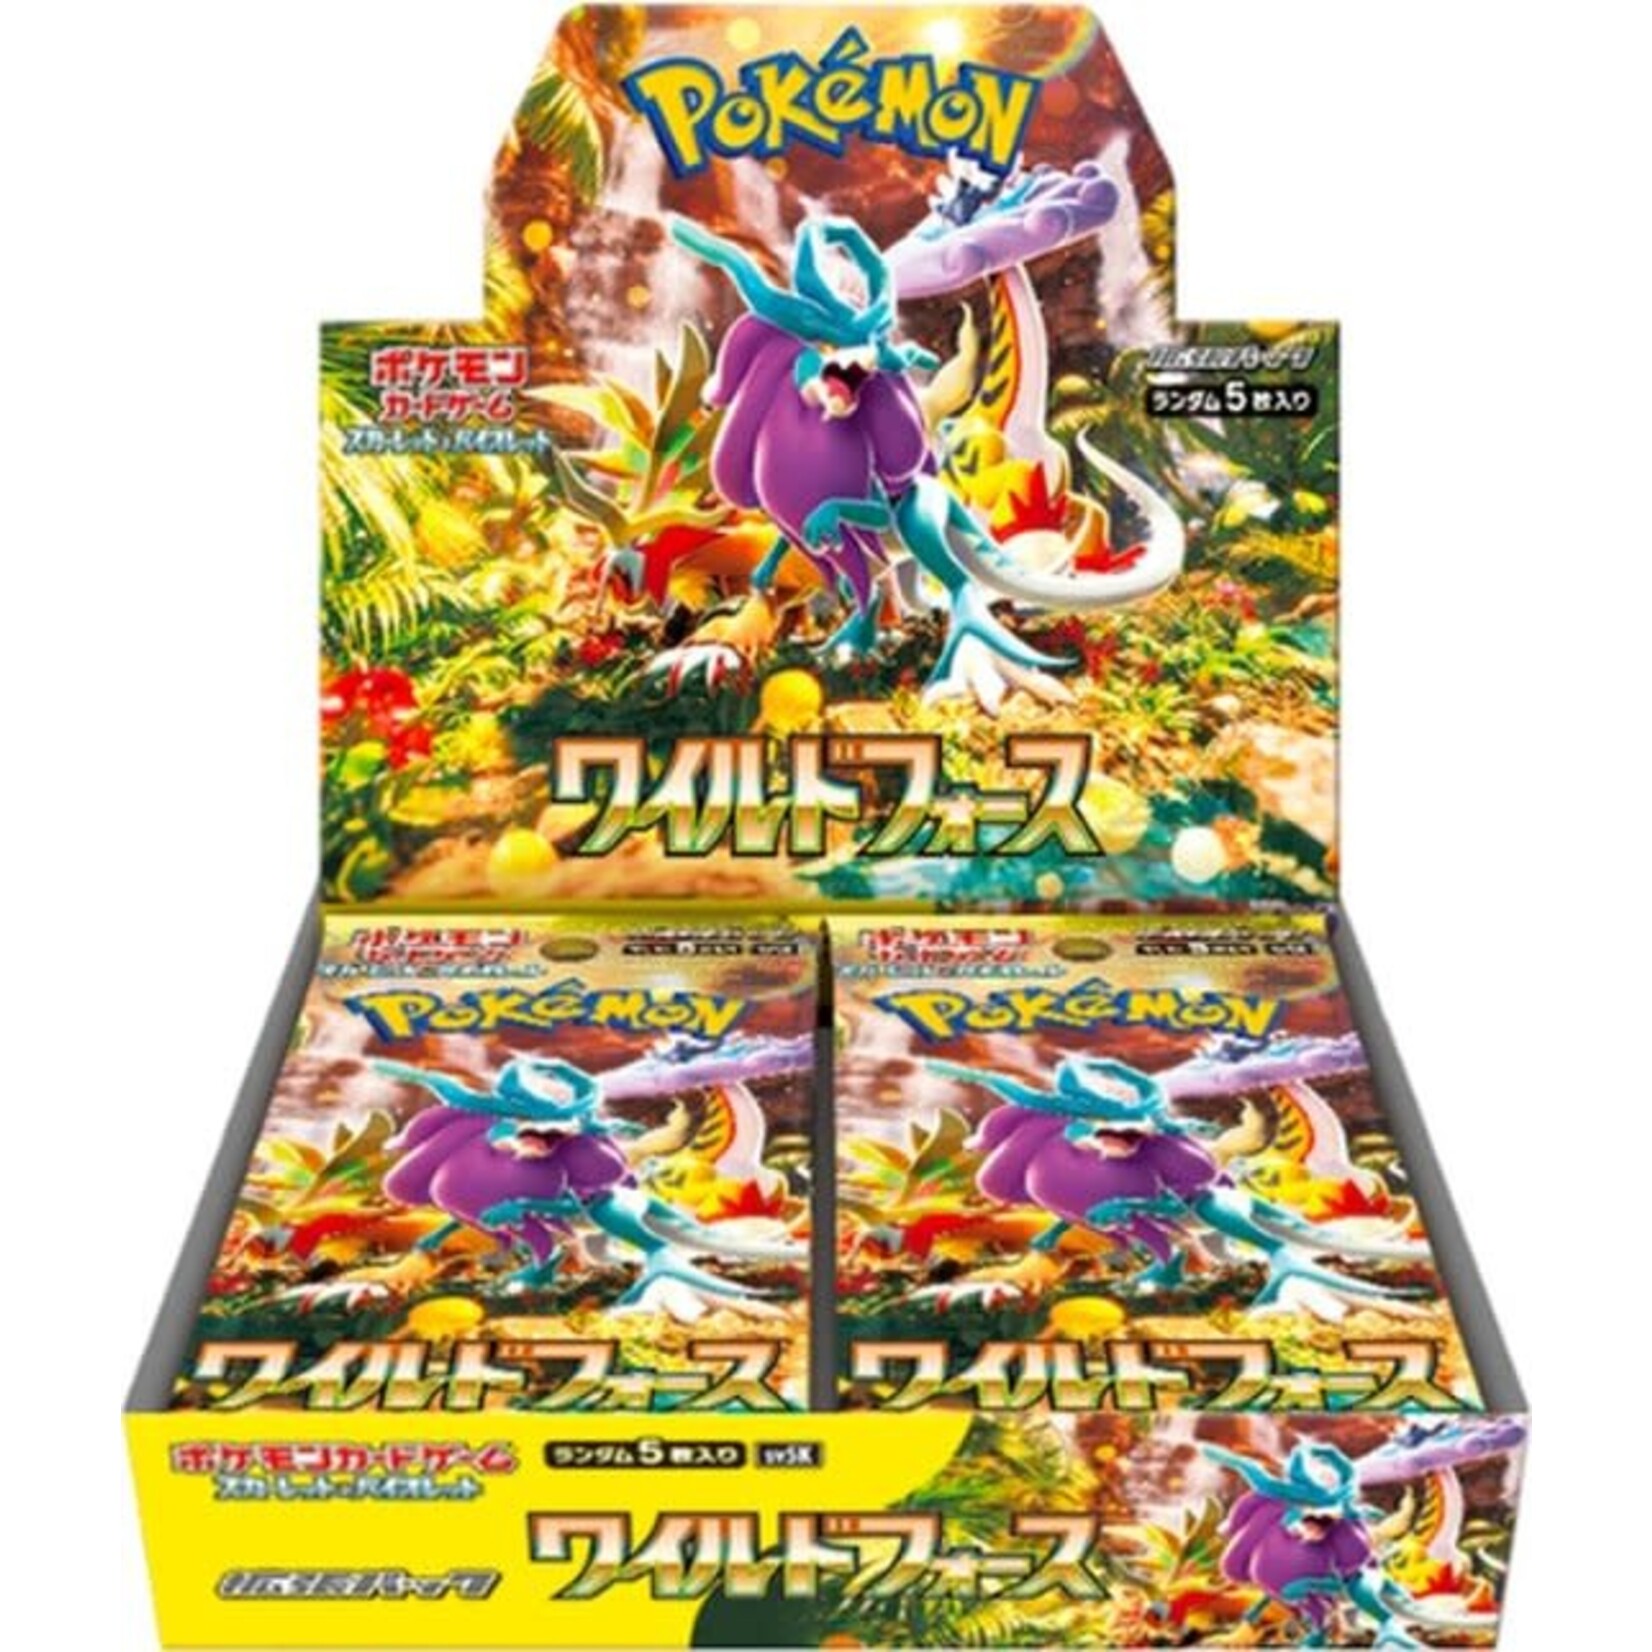 Pokémon Pokemon Wild force Japanse Booster Box